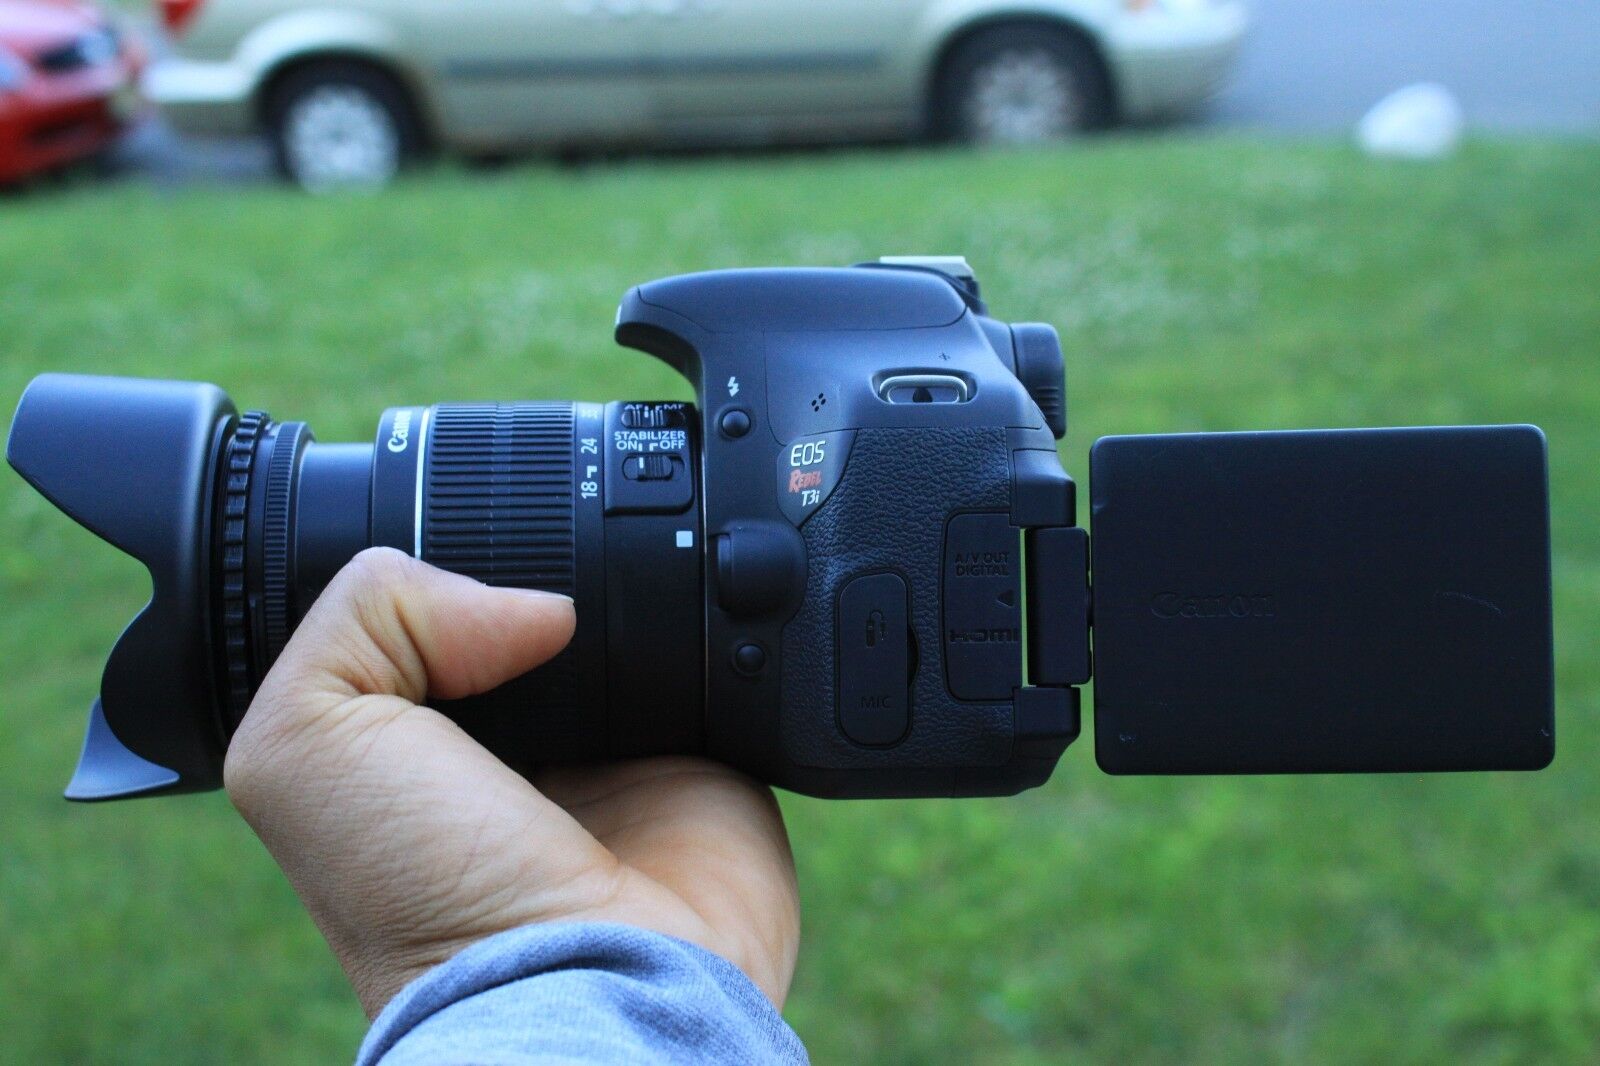 Canon T3i / 600D 18.0 MP SLR Camera With 18-55mm Lens Kit (2 LENSES) Rebel EOS  Canon 5169B003